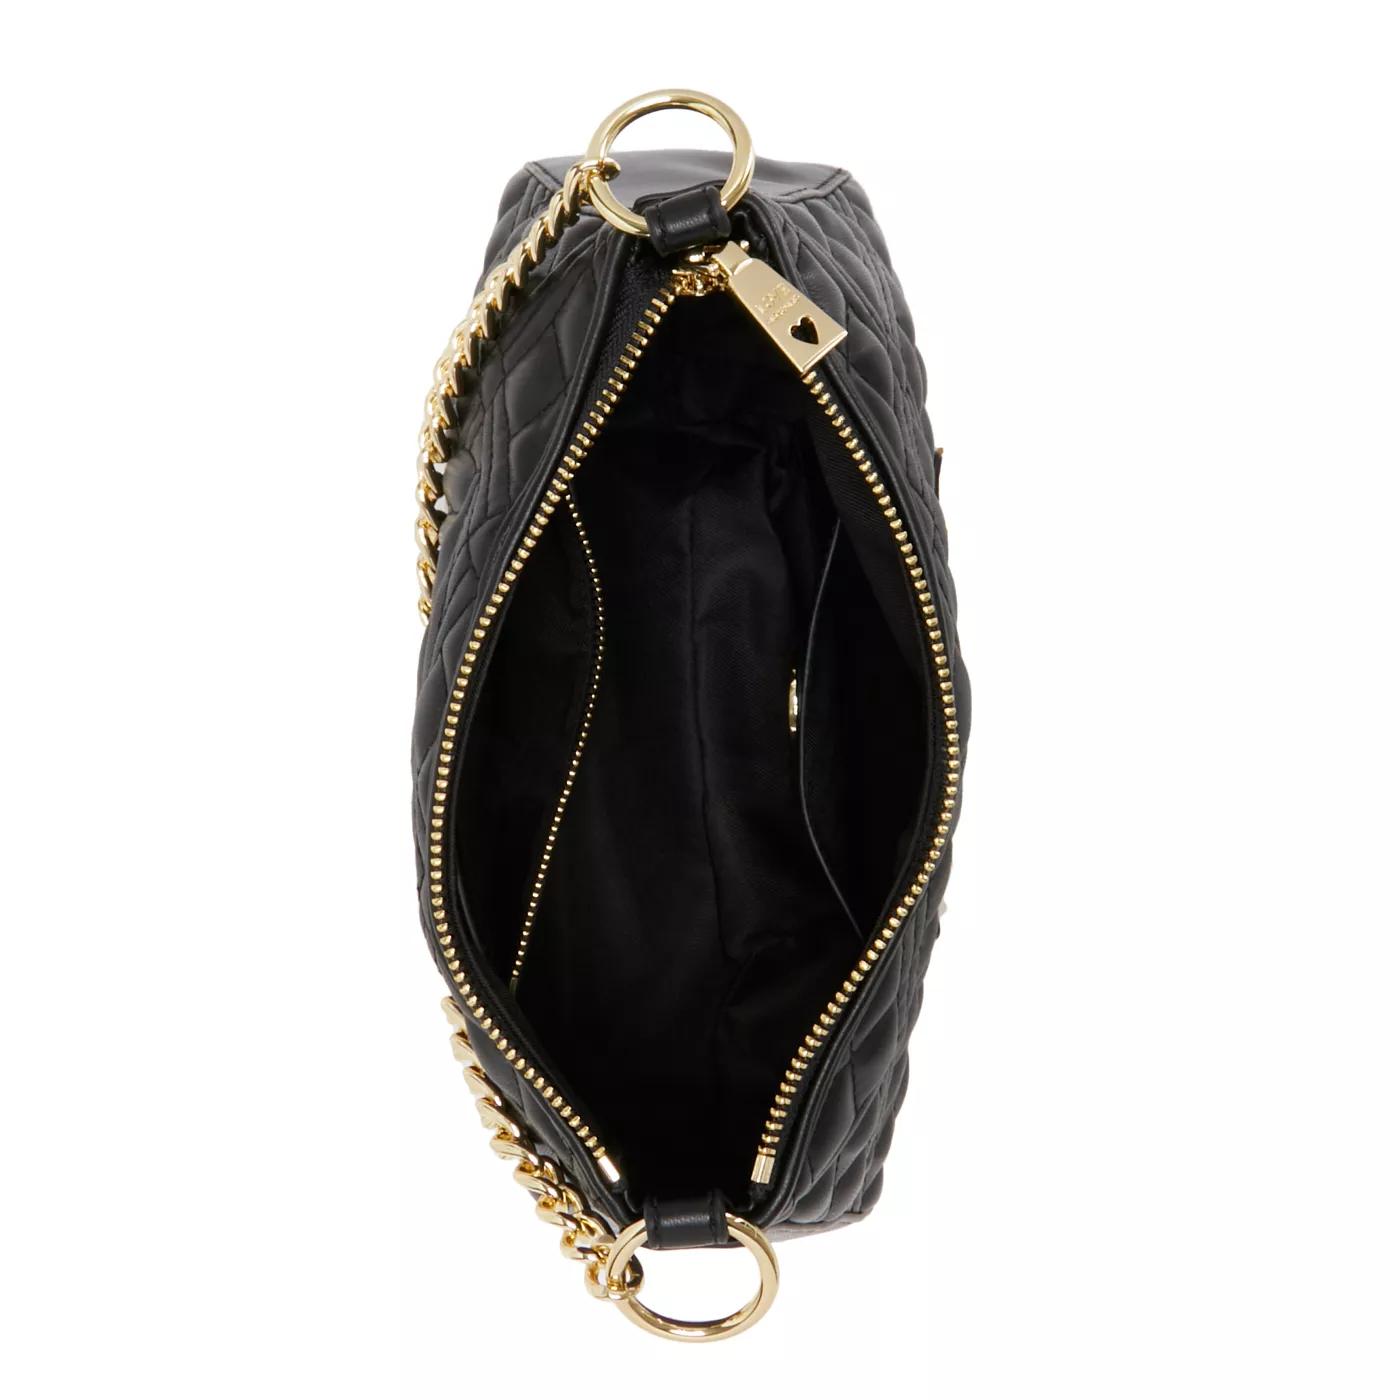 Love Moschino Crossbody bags Quilted Bag Schwarze Umhängetasche J in zwart